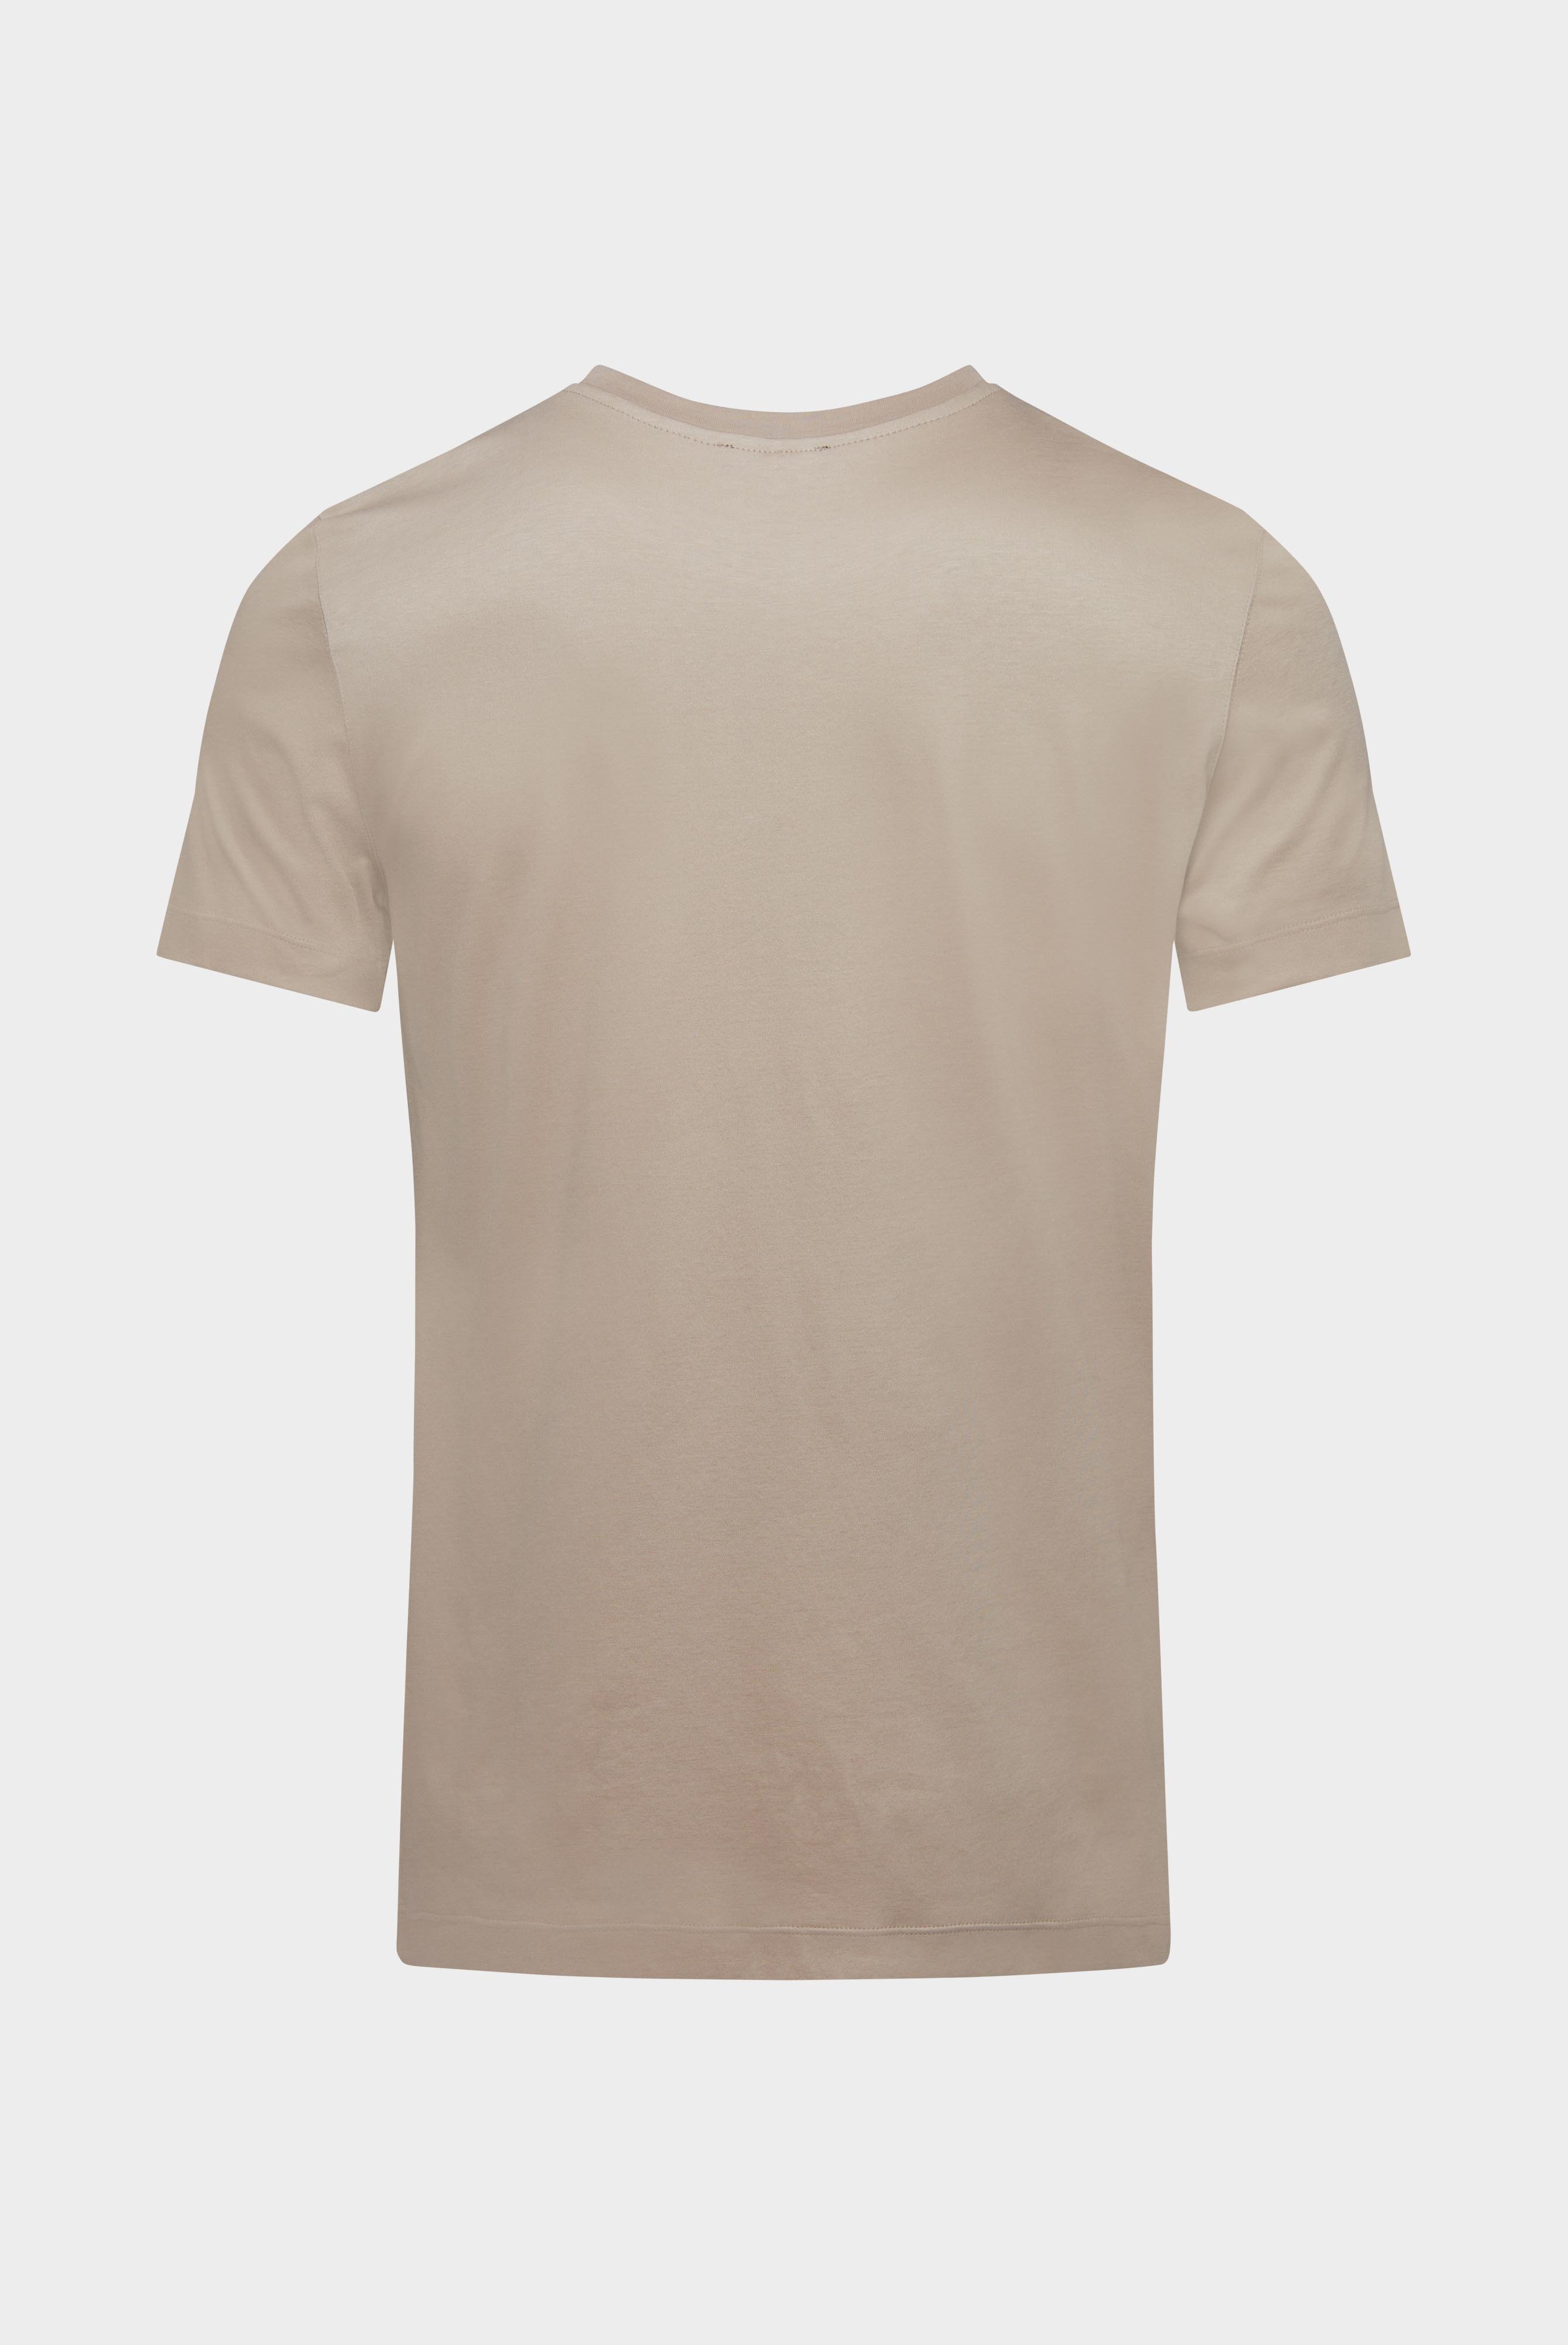 T-Shirts+T-Shirt made of Swiss Cotton+20.1717.UX.180031.140.X3L